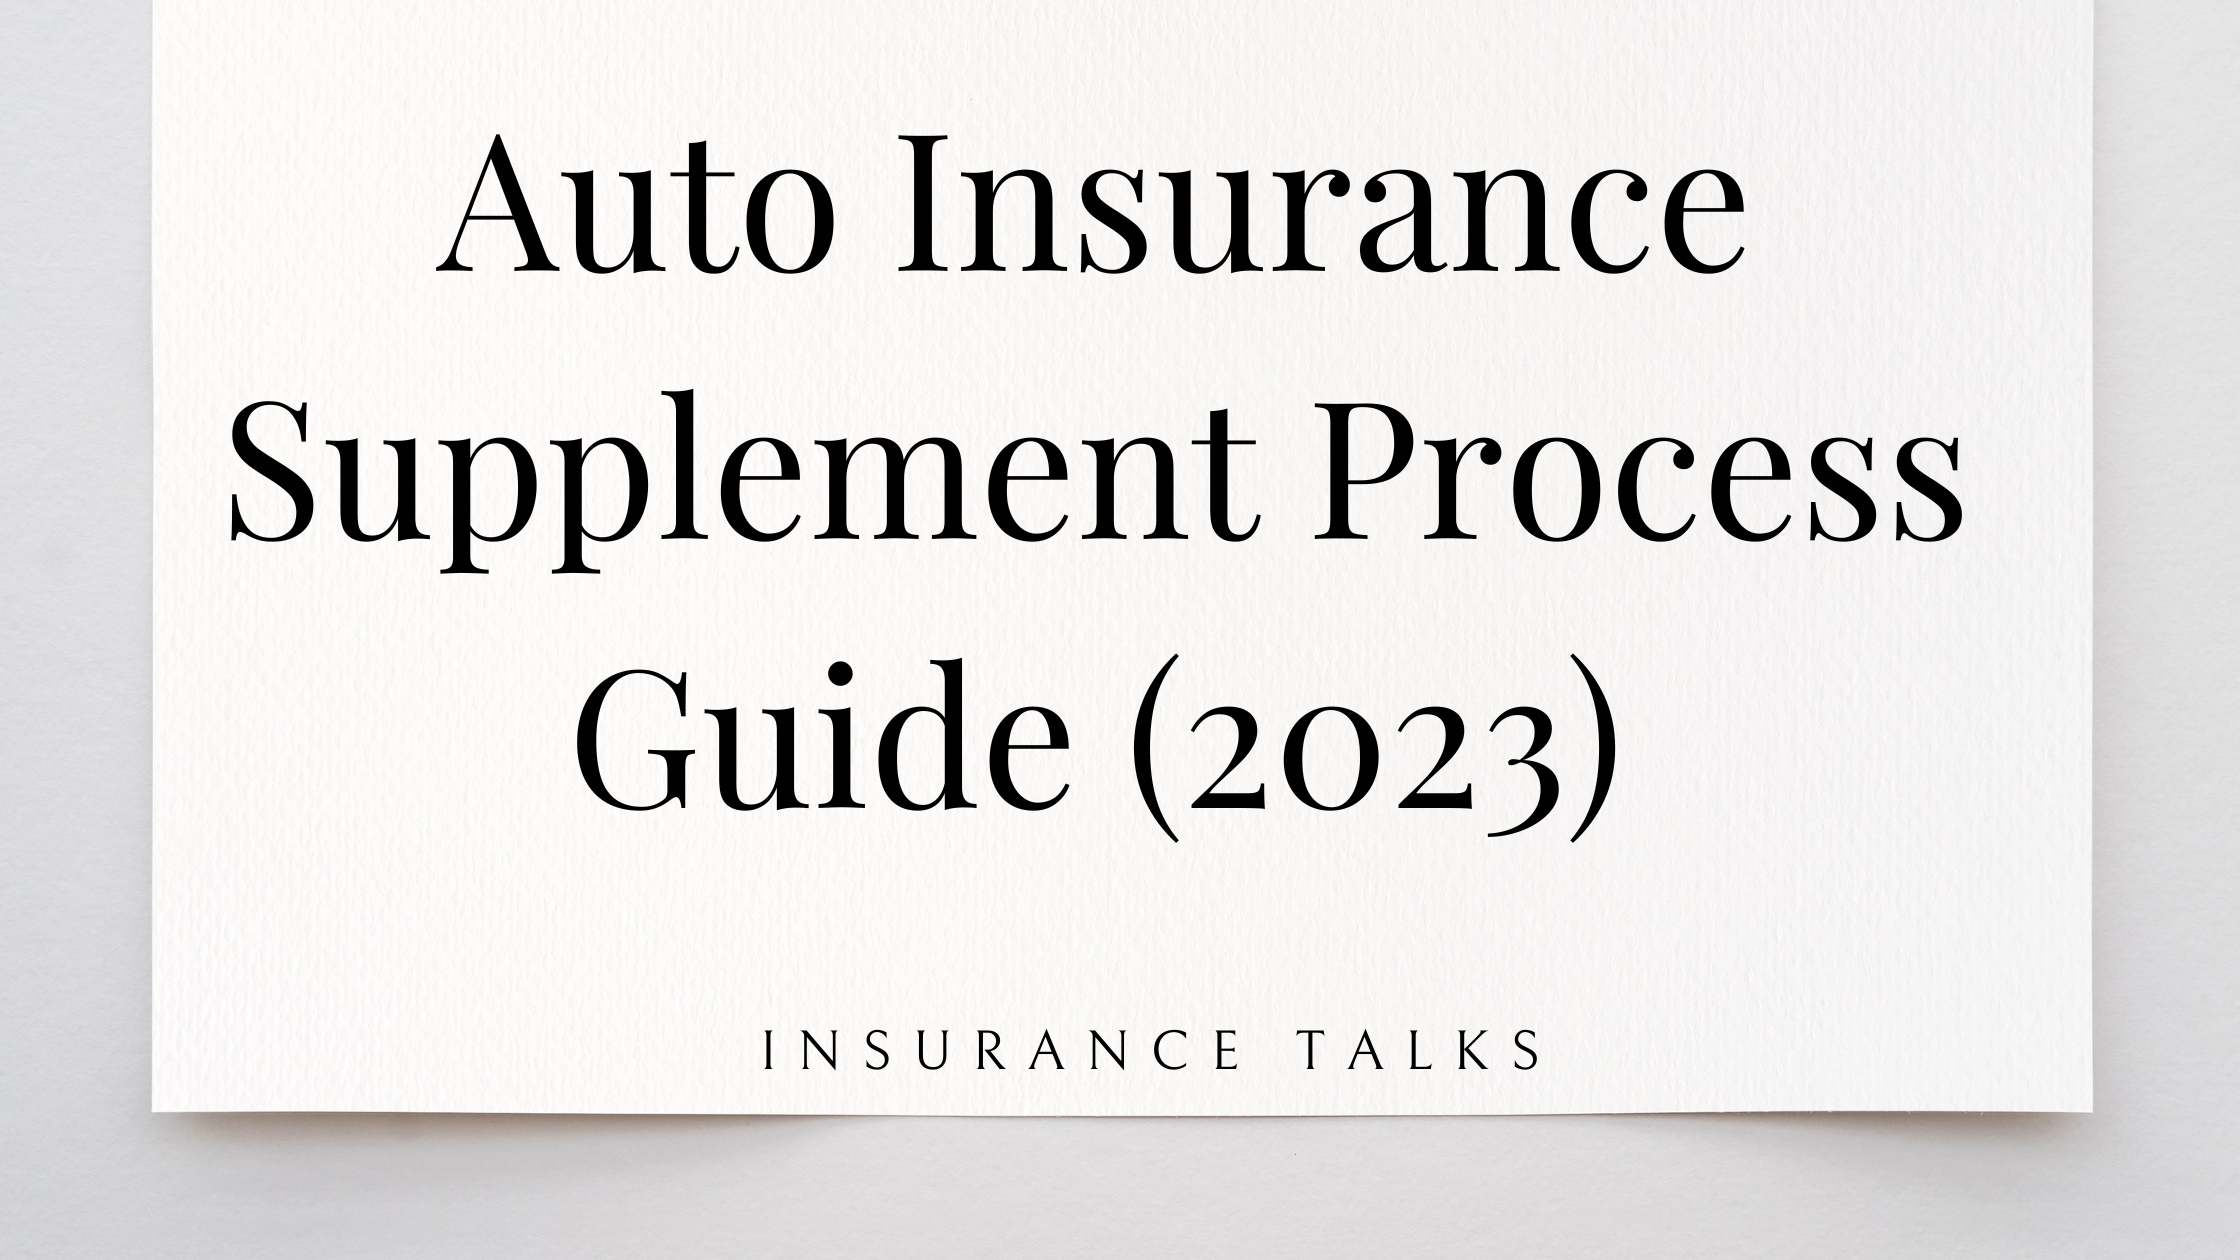 Auto Insurance Supplement Process Guide (2023)